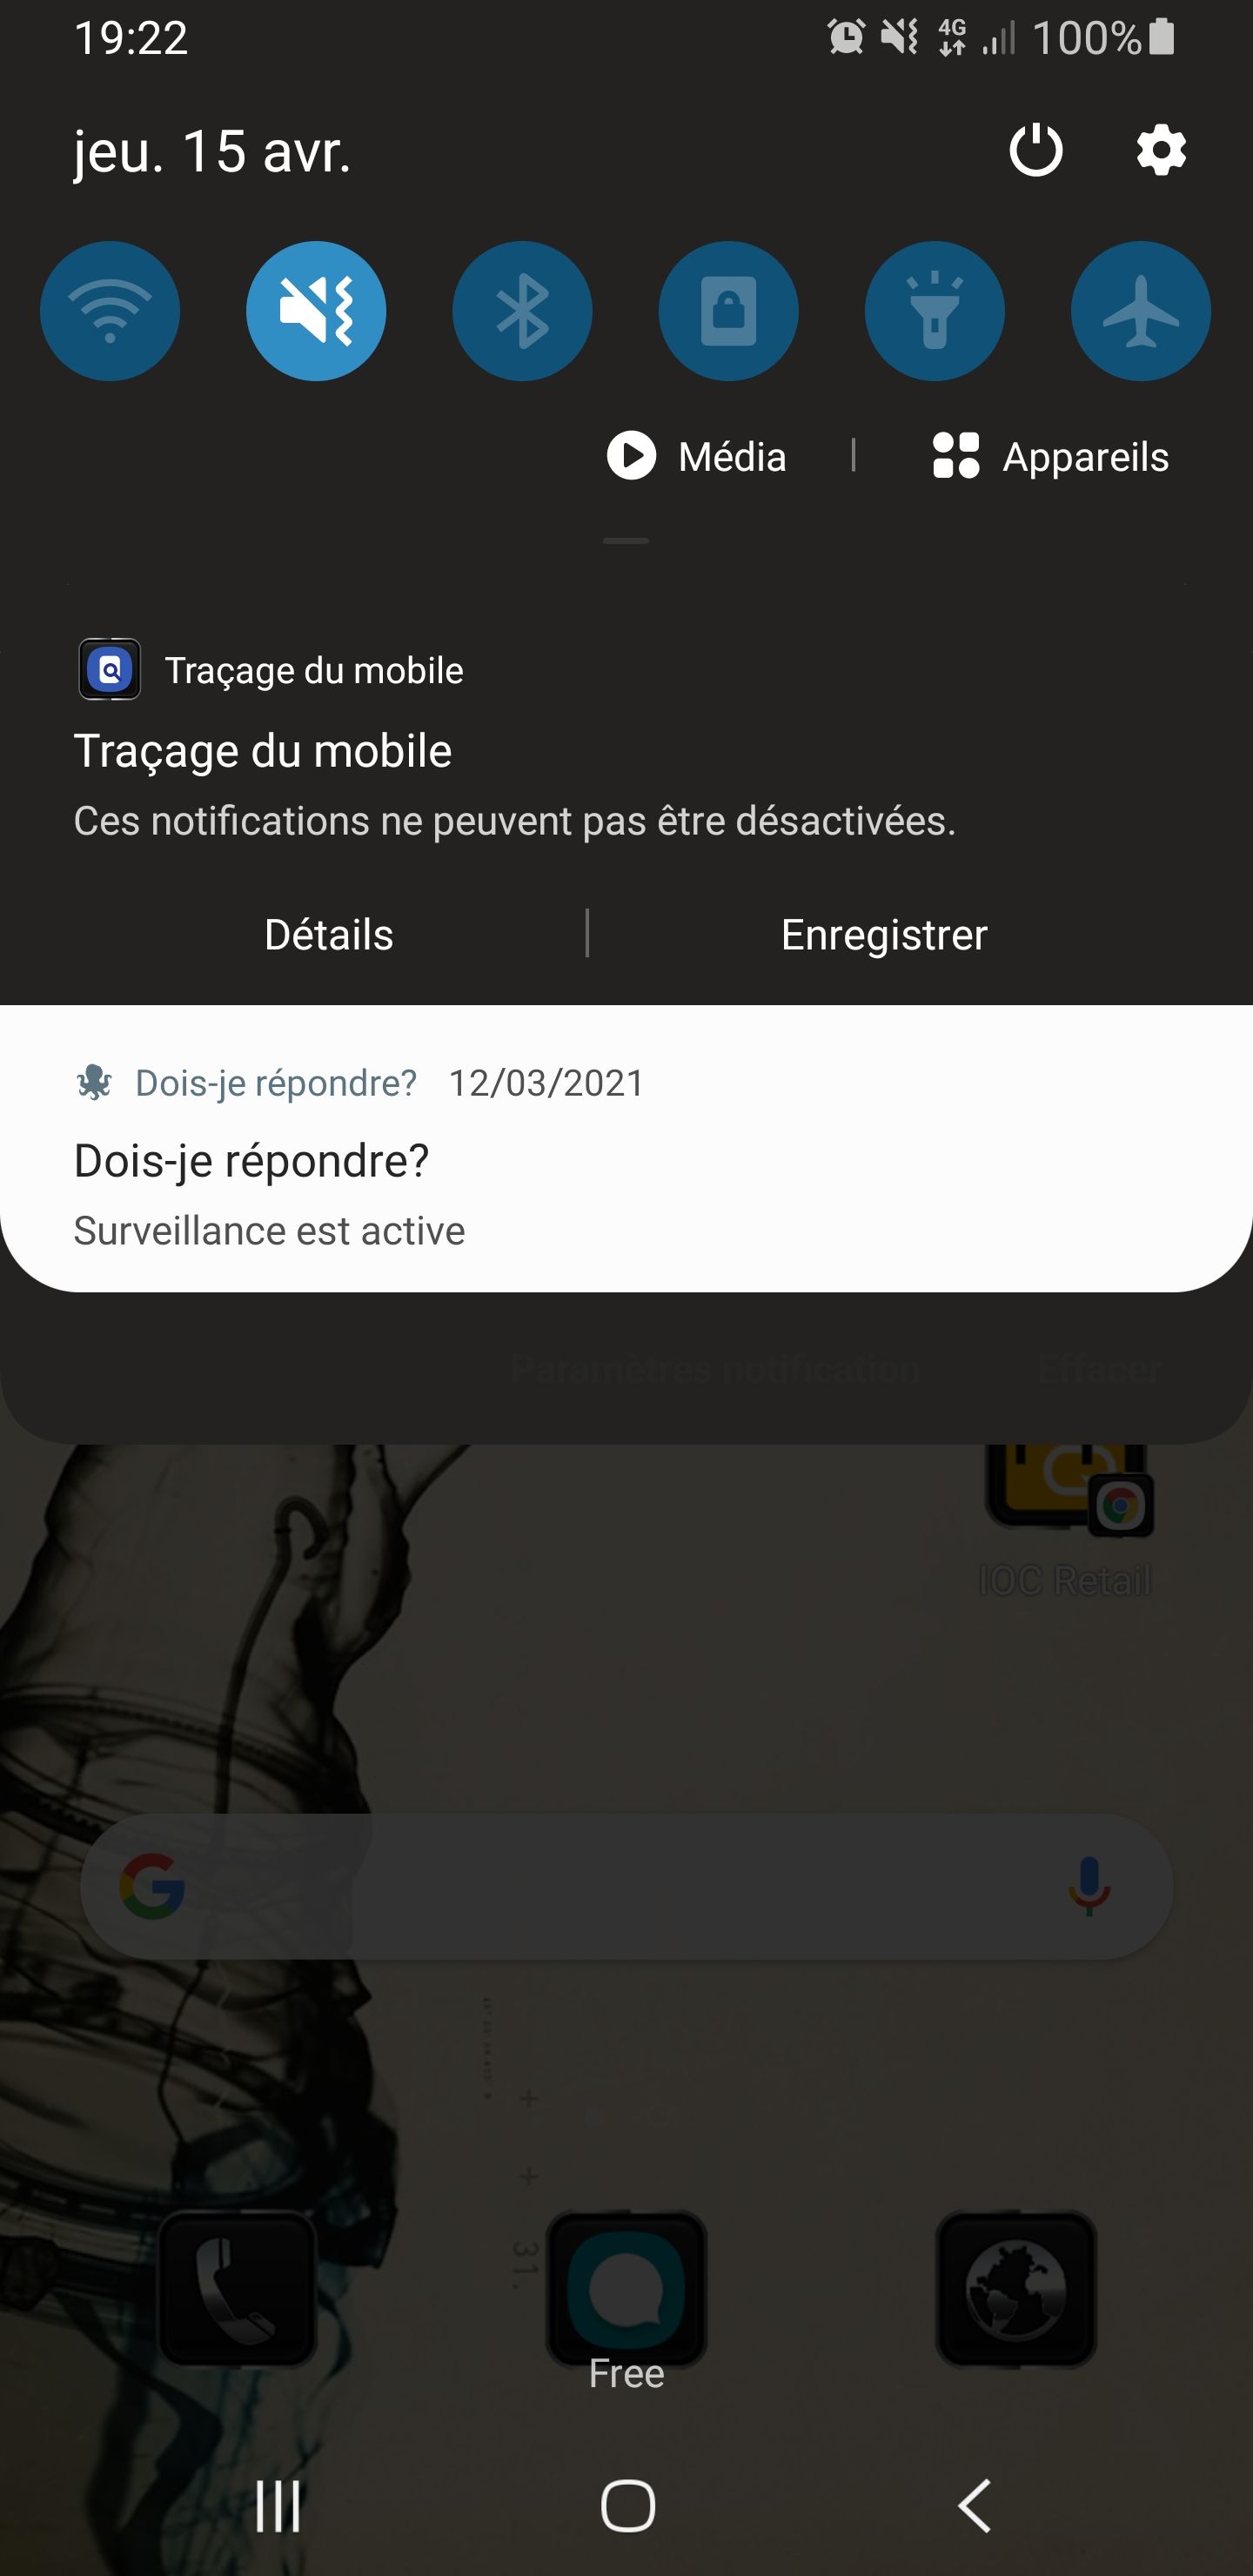 Notification Traçage du mobile - Samsung Community